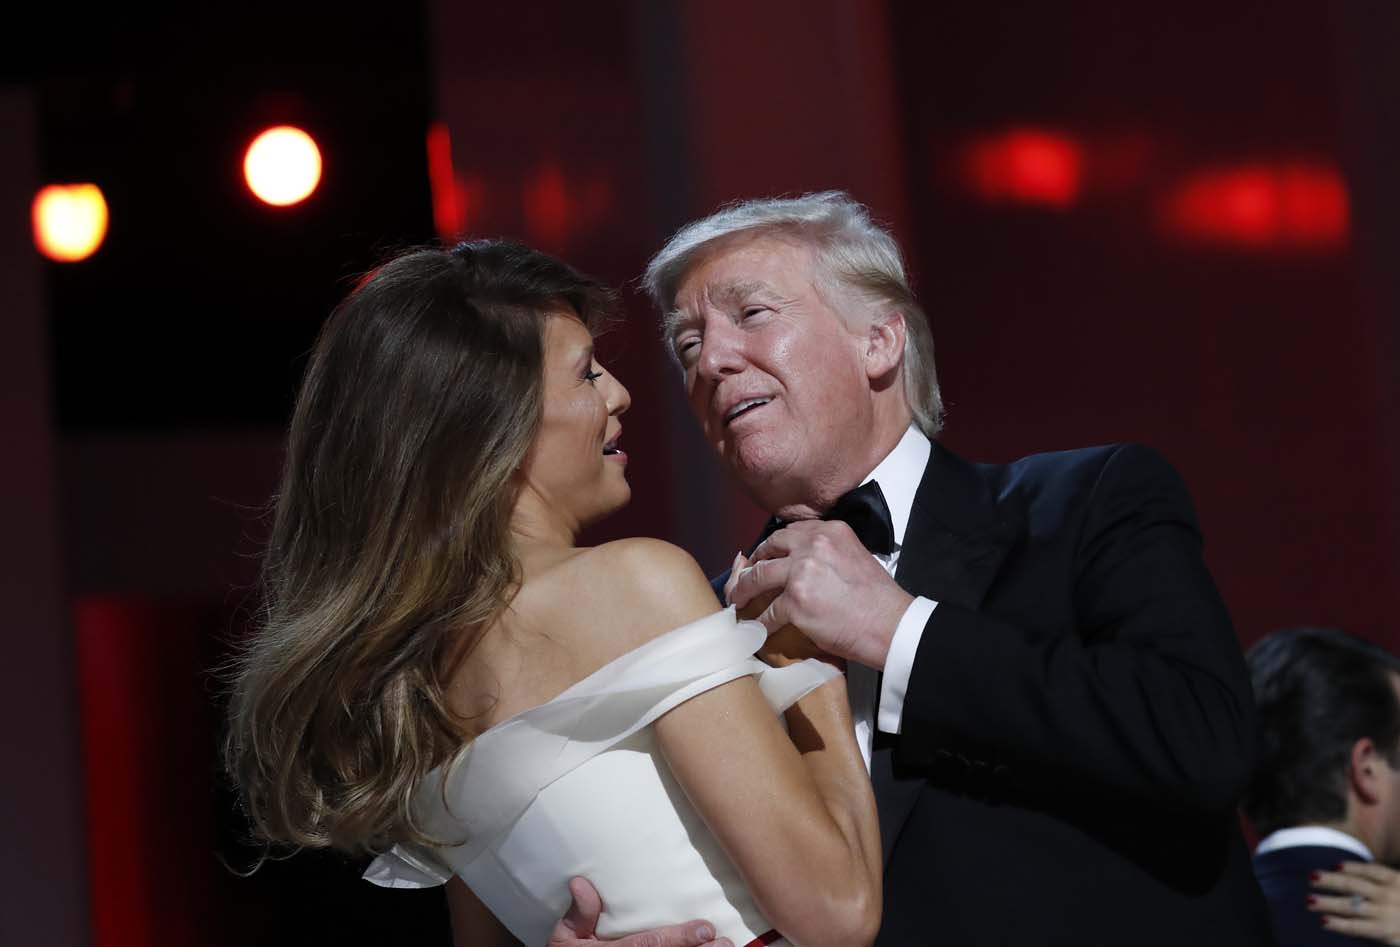 President Donald Trump dances with first lady Melania Trump at the Freedom Ball, Friday, Jan. 20, 2017 in Washington. (AP Photo/Alex Brandon)